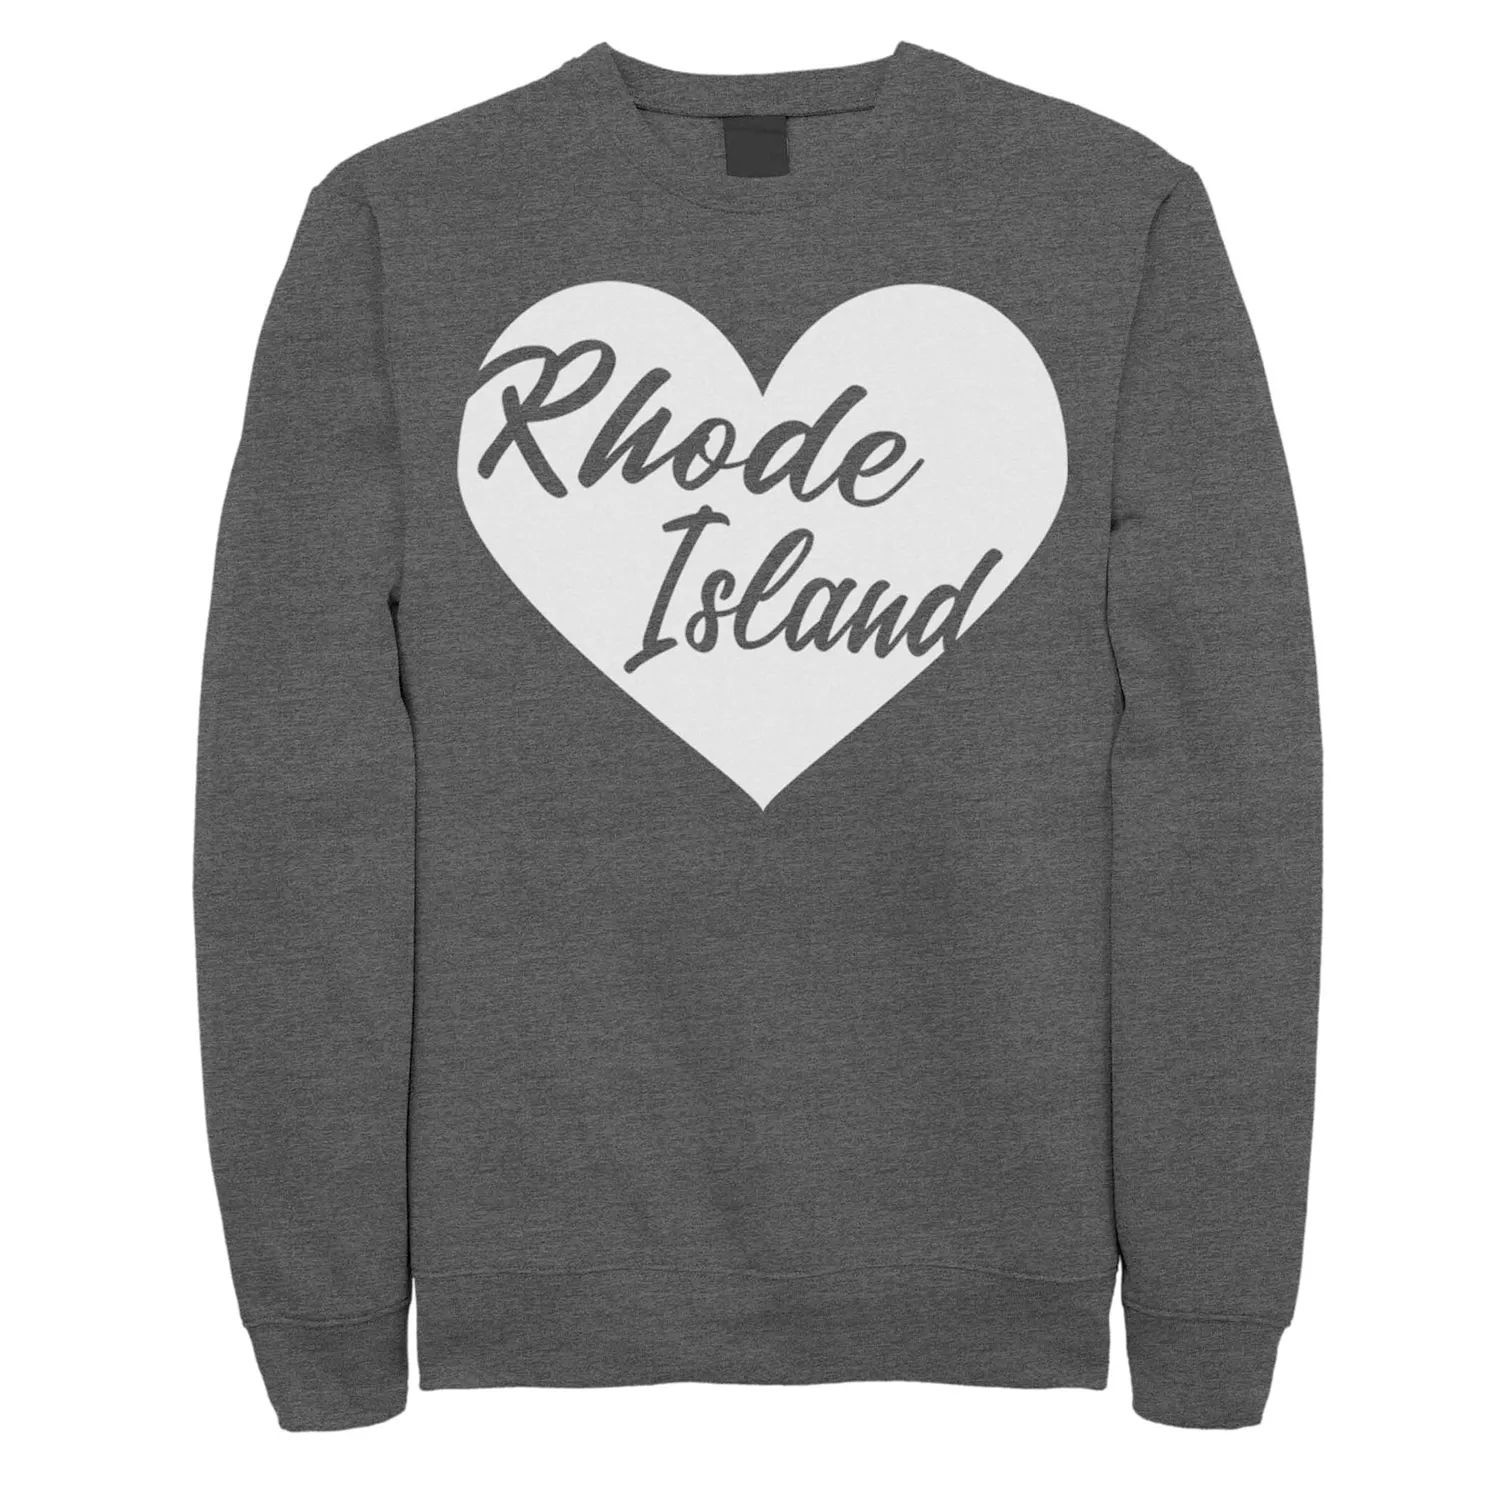 carter charlotte rhode island red Толстовка с рисунком Rhode Island Heart для юниоров